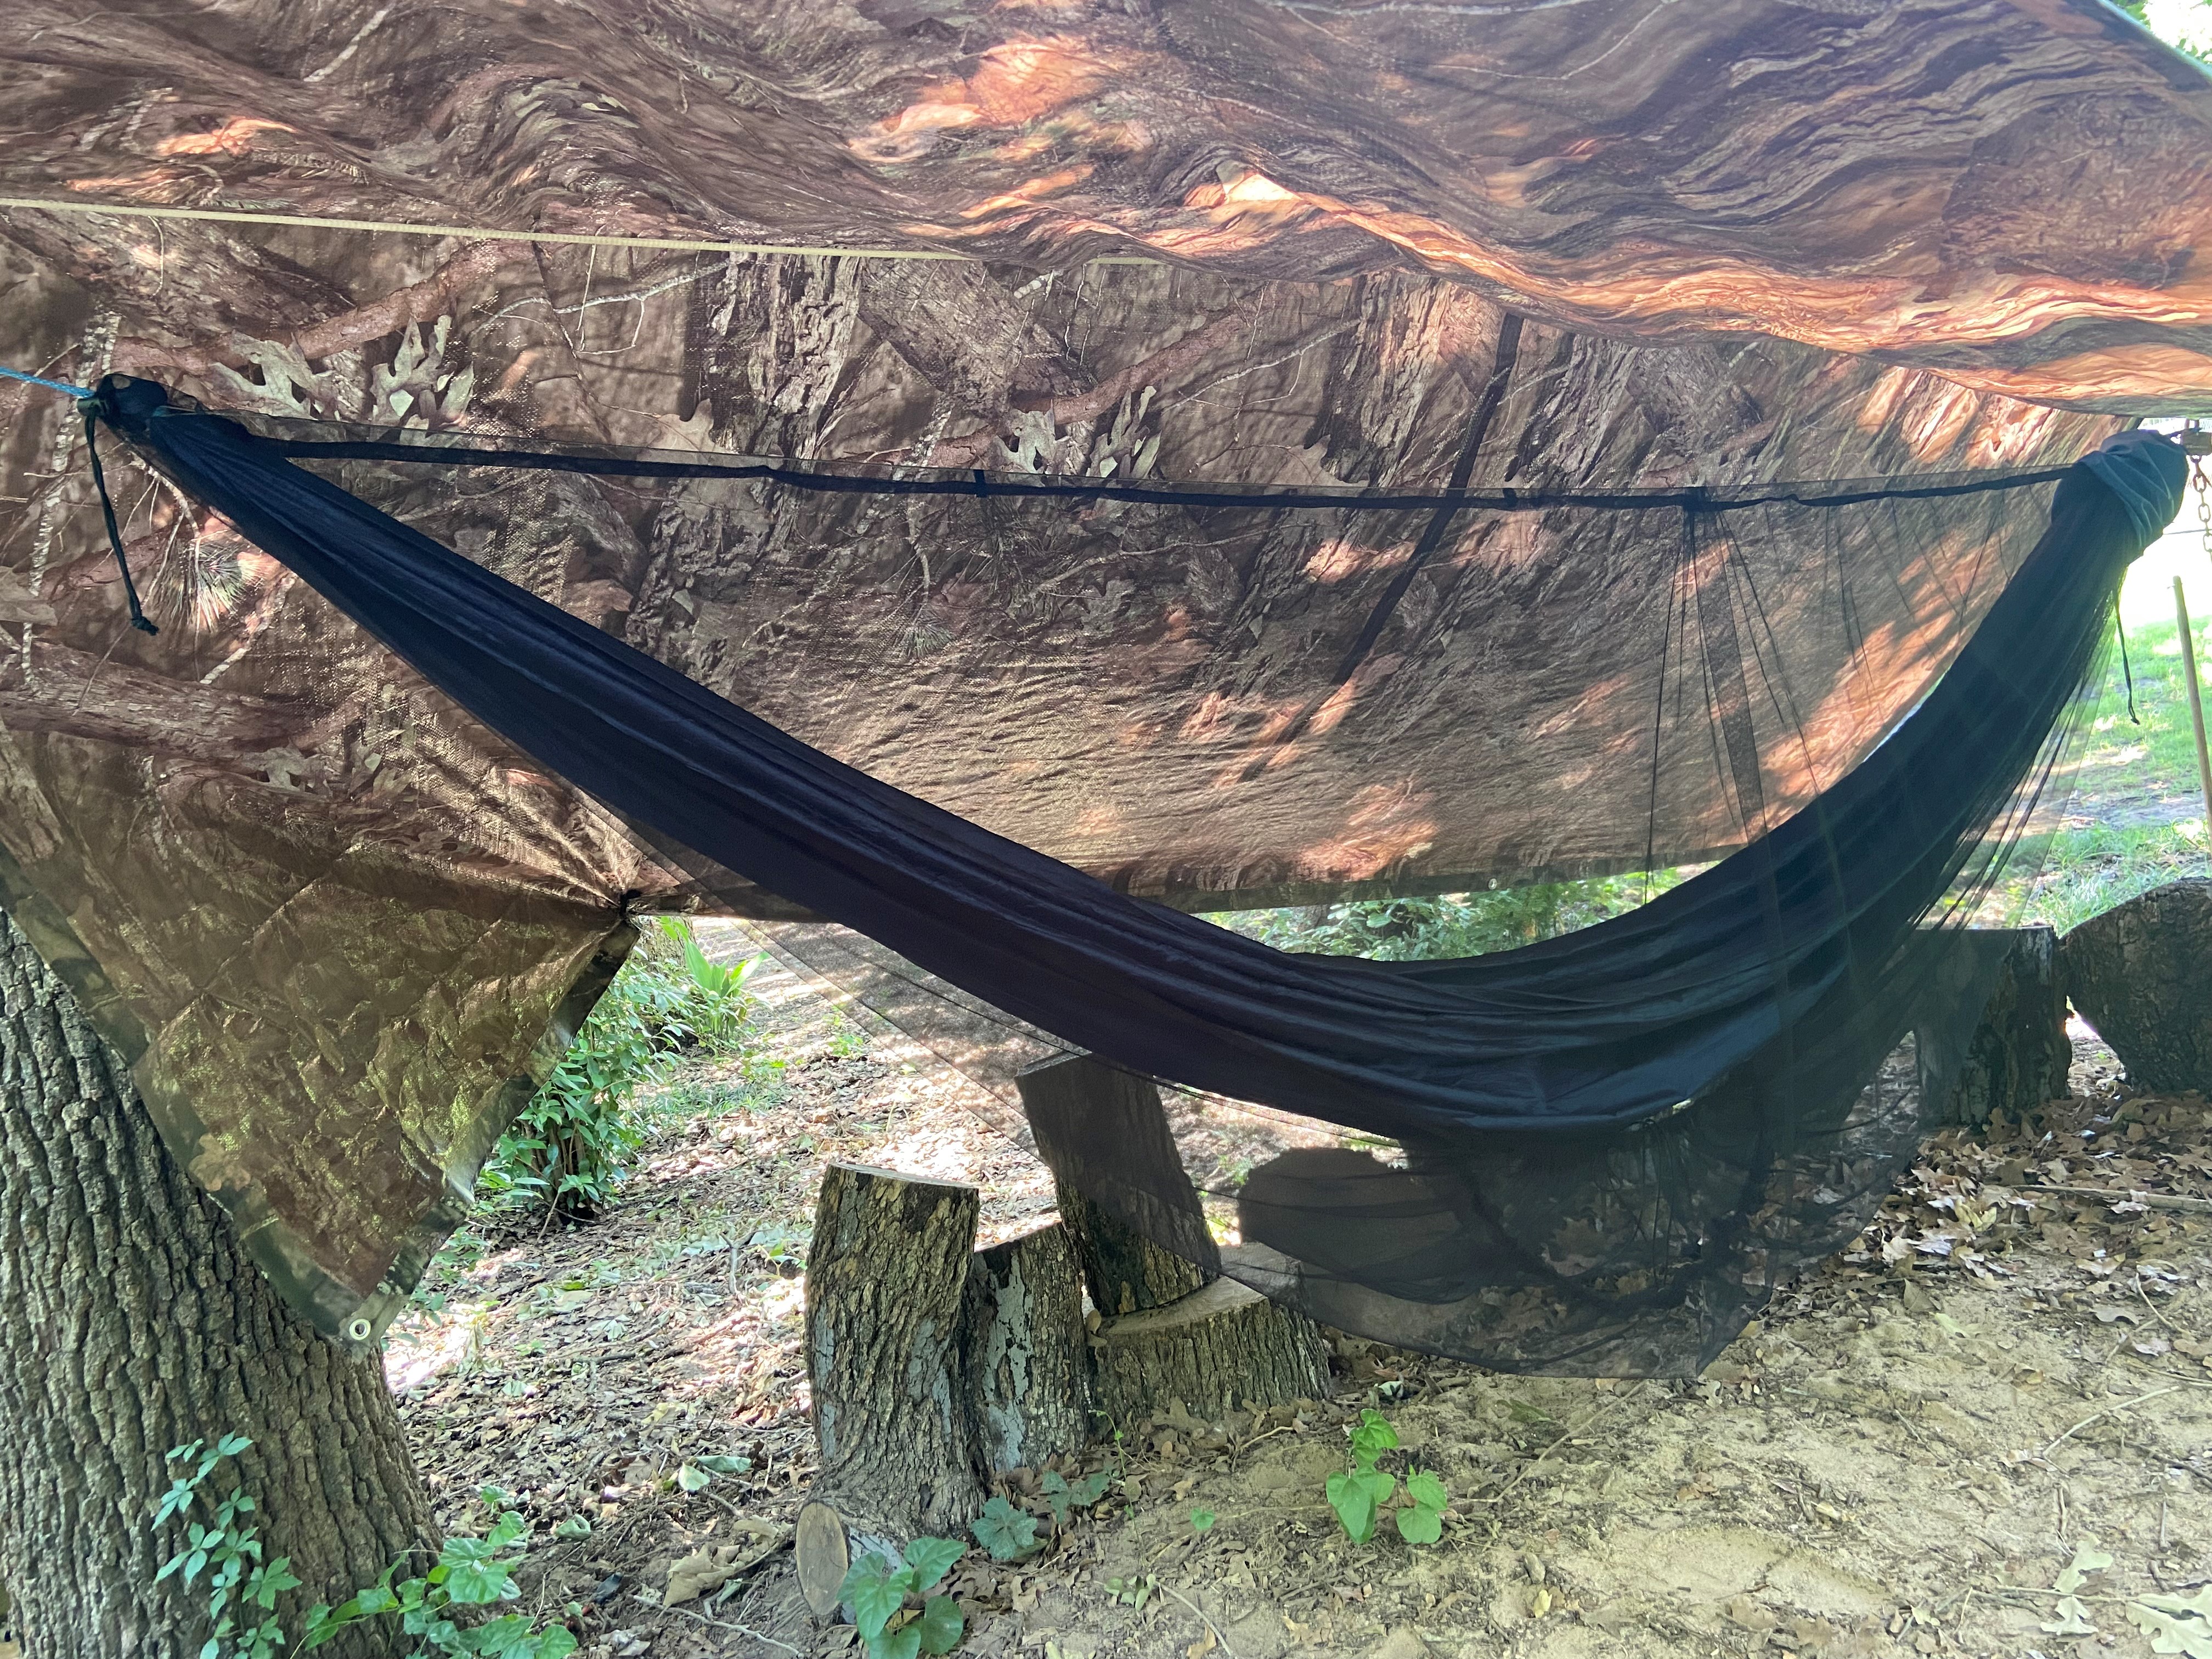 The blue DIY hammock with bottom-entry bug-net